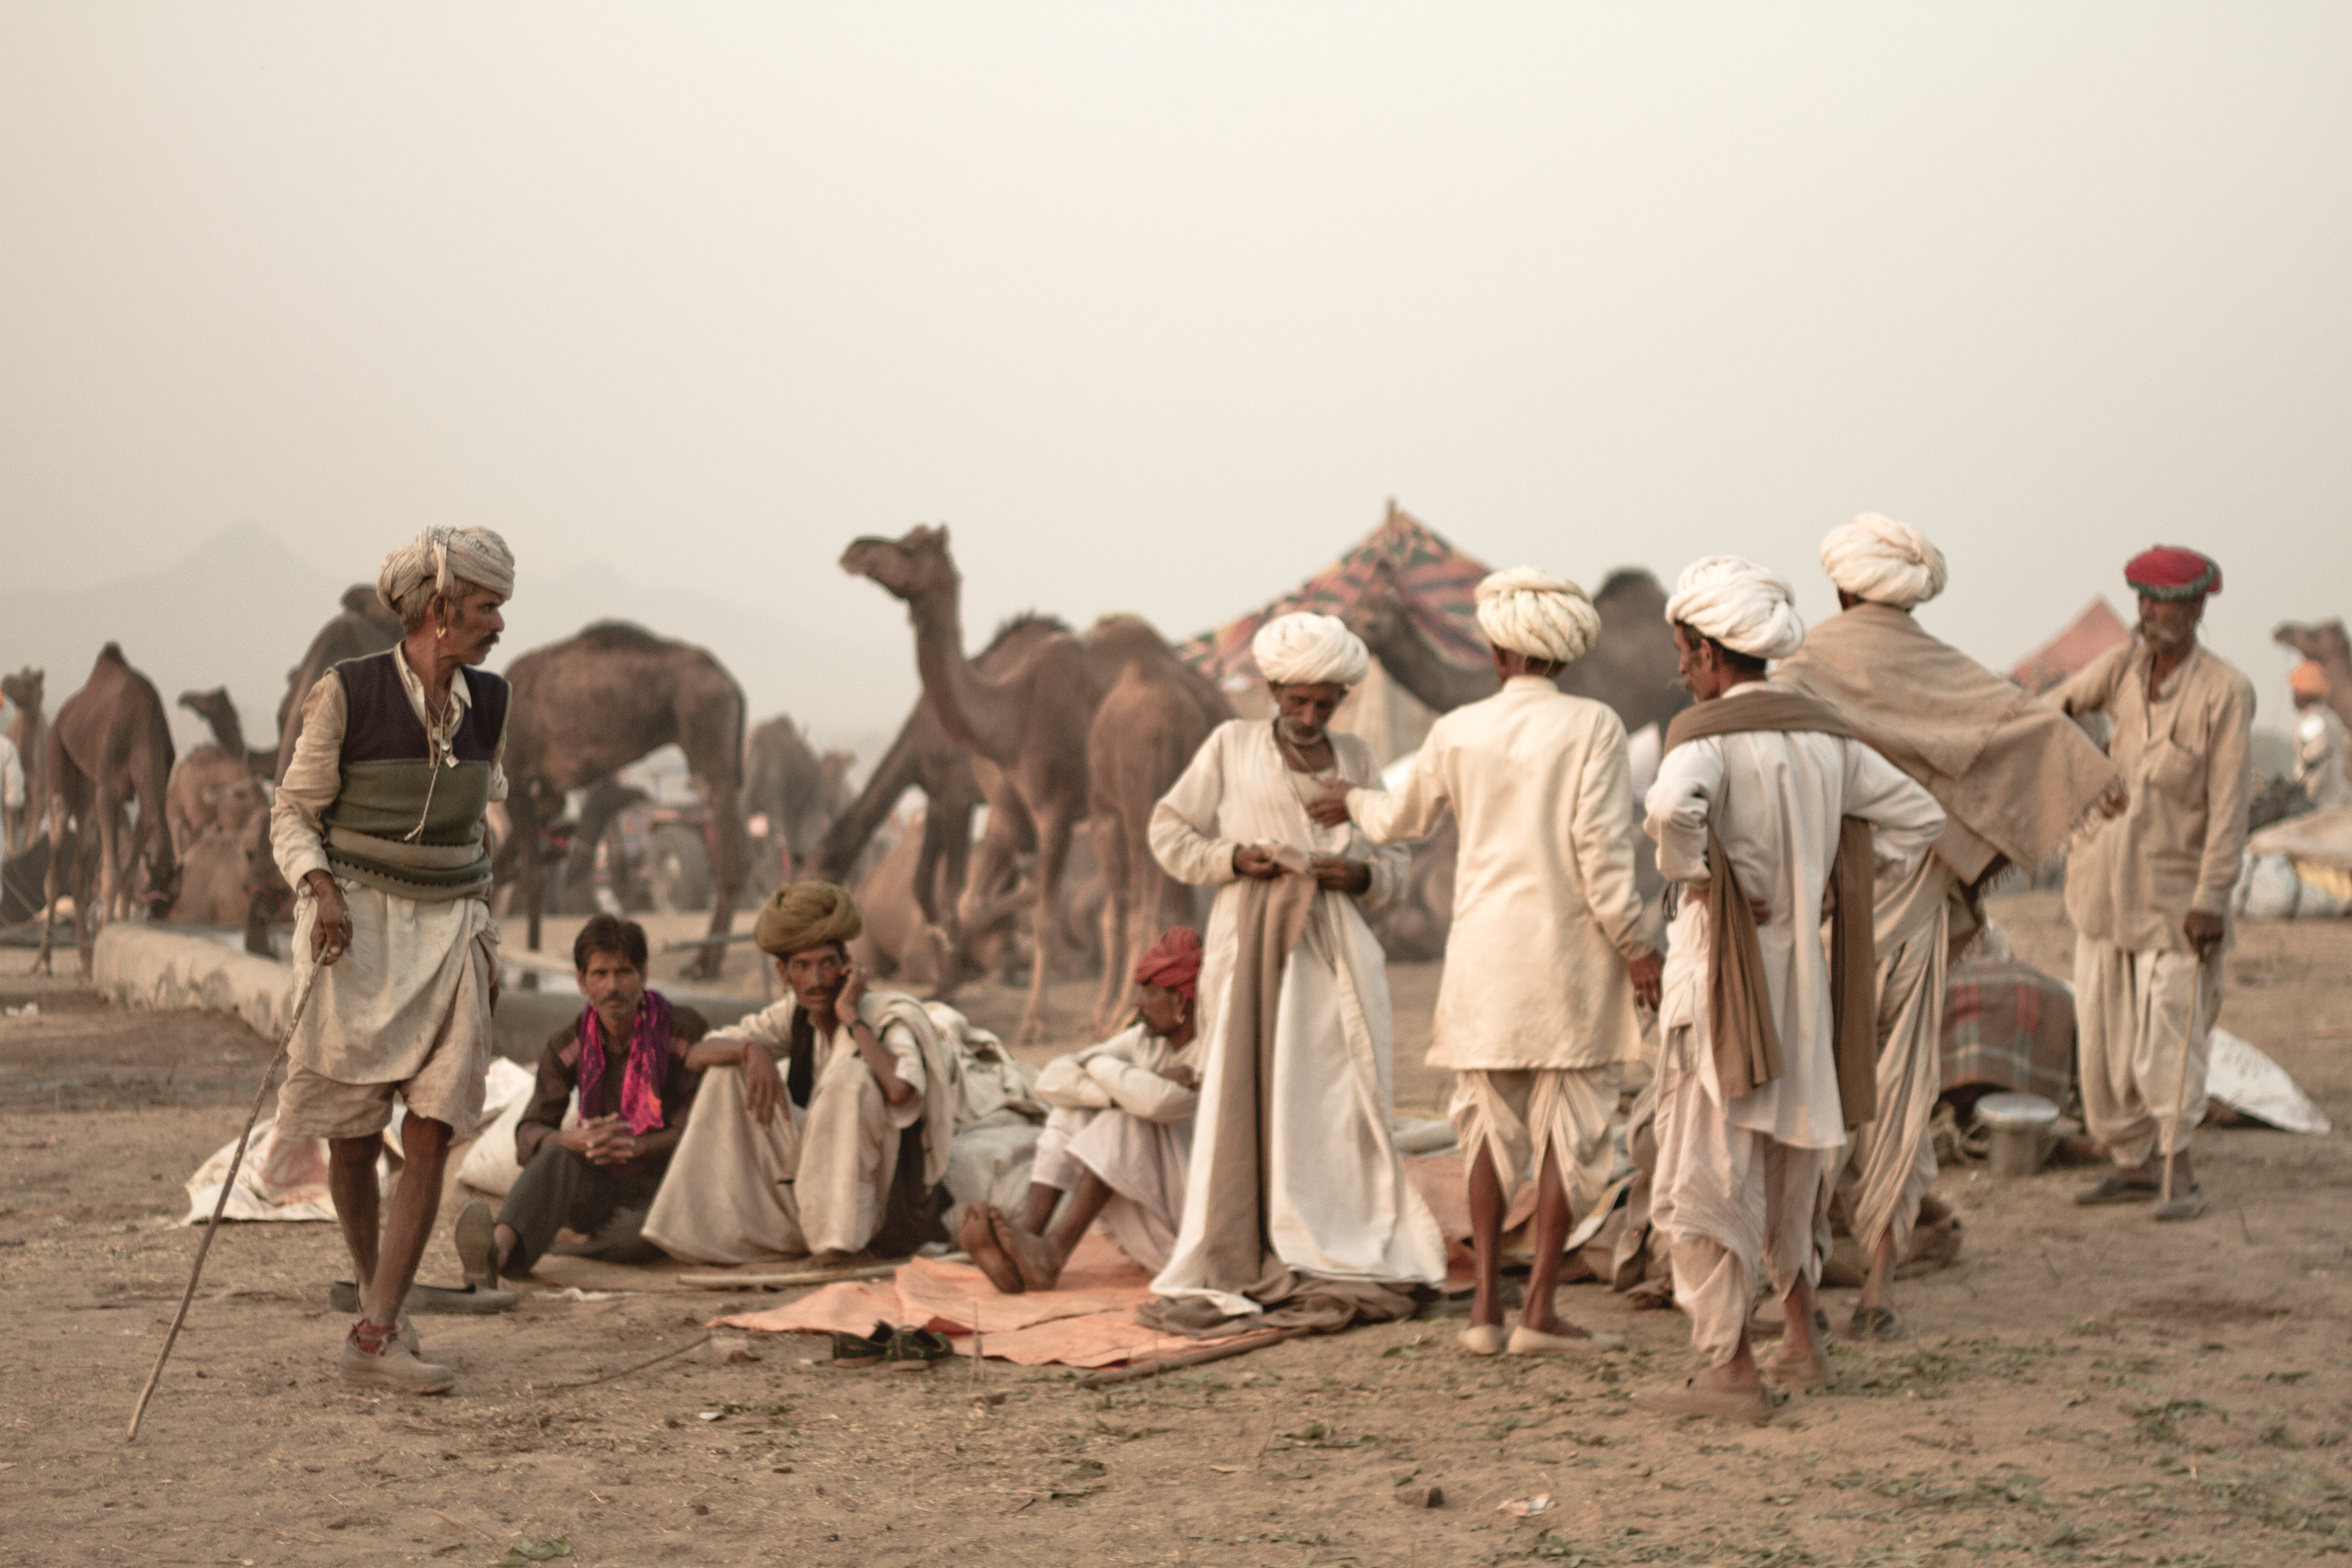 Traders, Camel Fair, India 2013